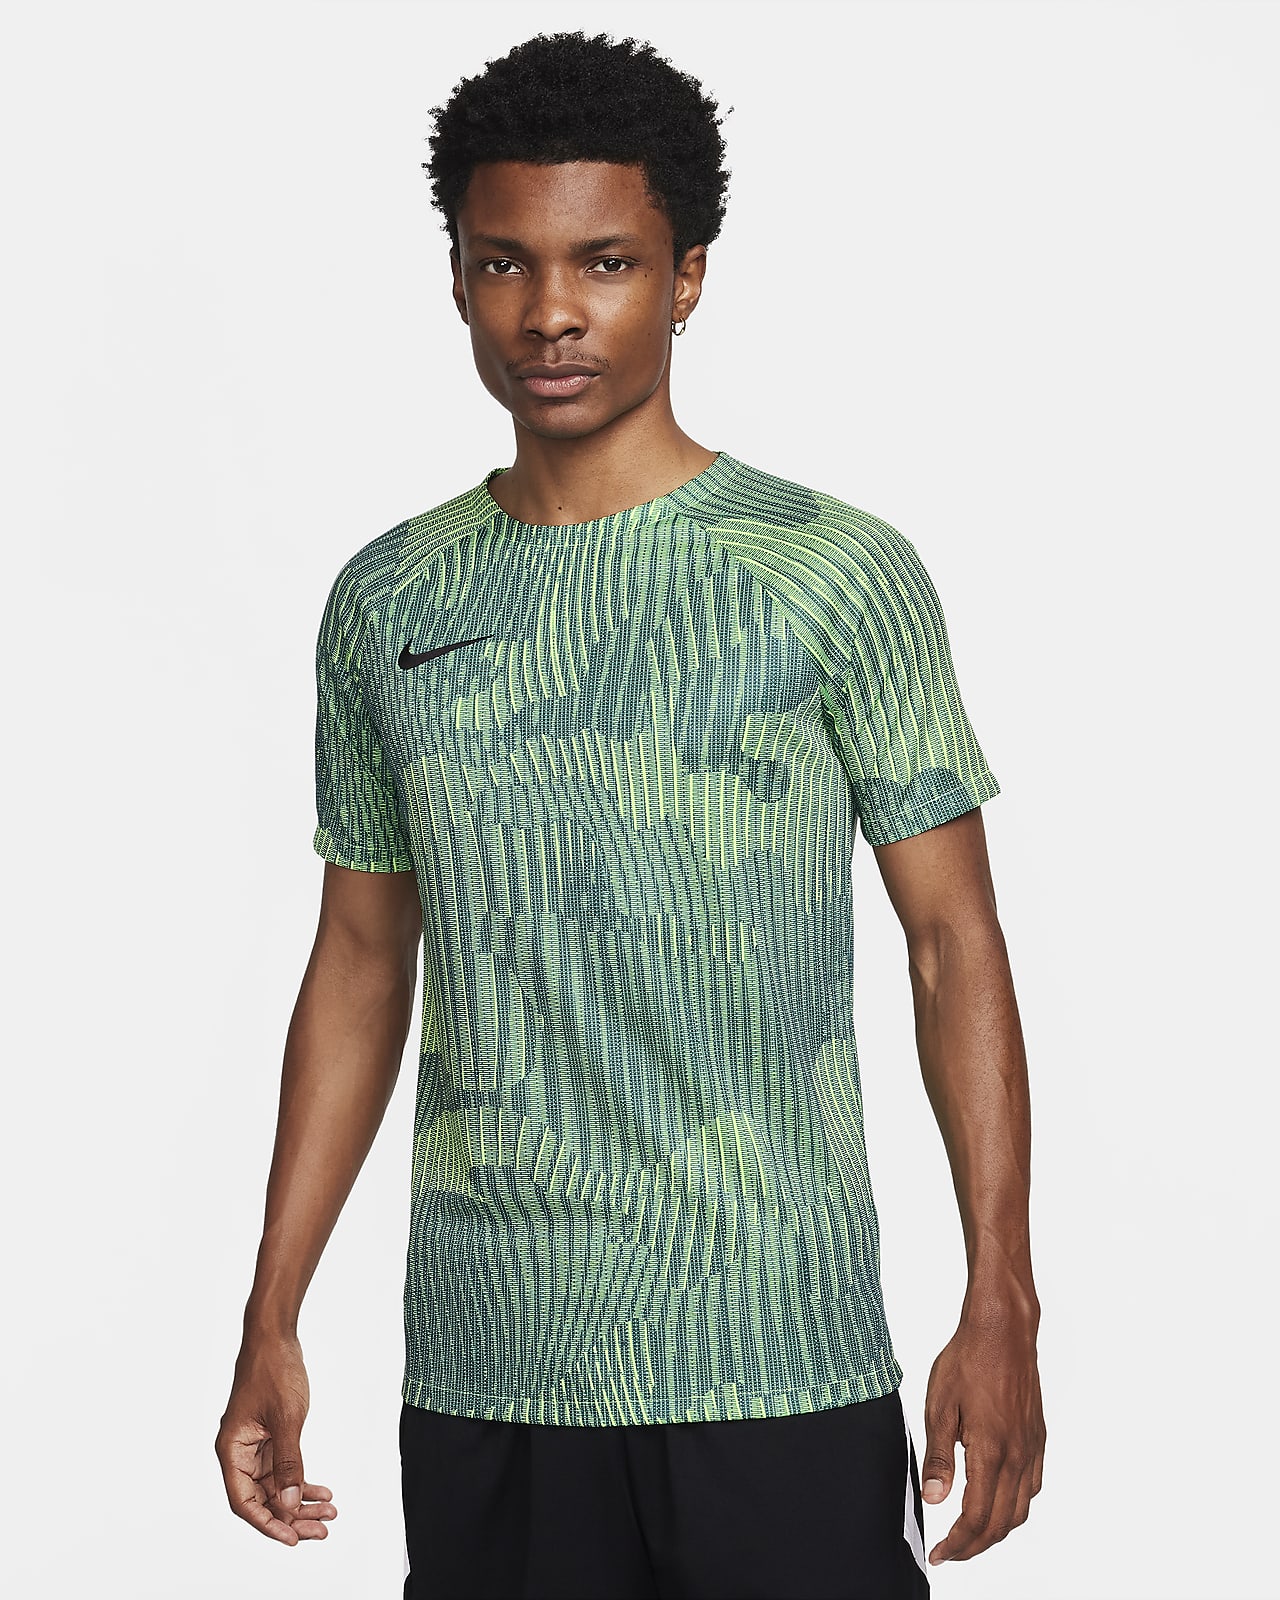 Nike Men's Dri-Fit Strike Short Sleeve Soccer Top, Large, Black